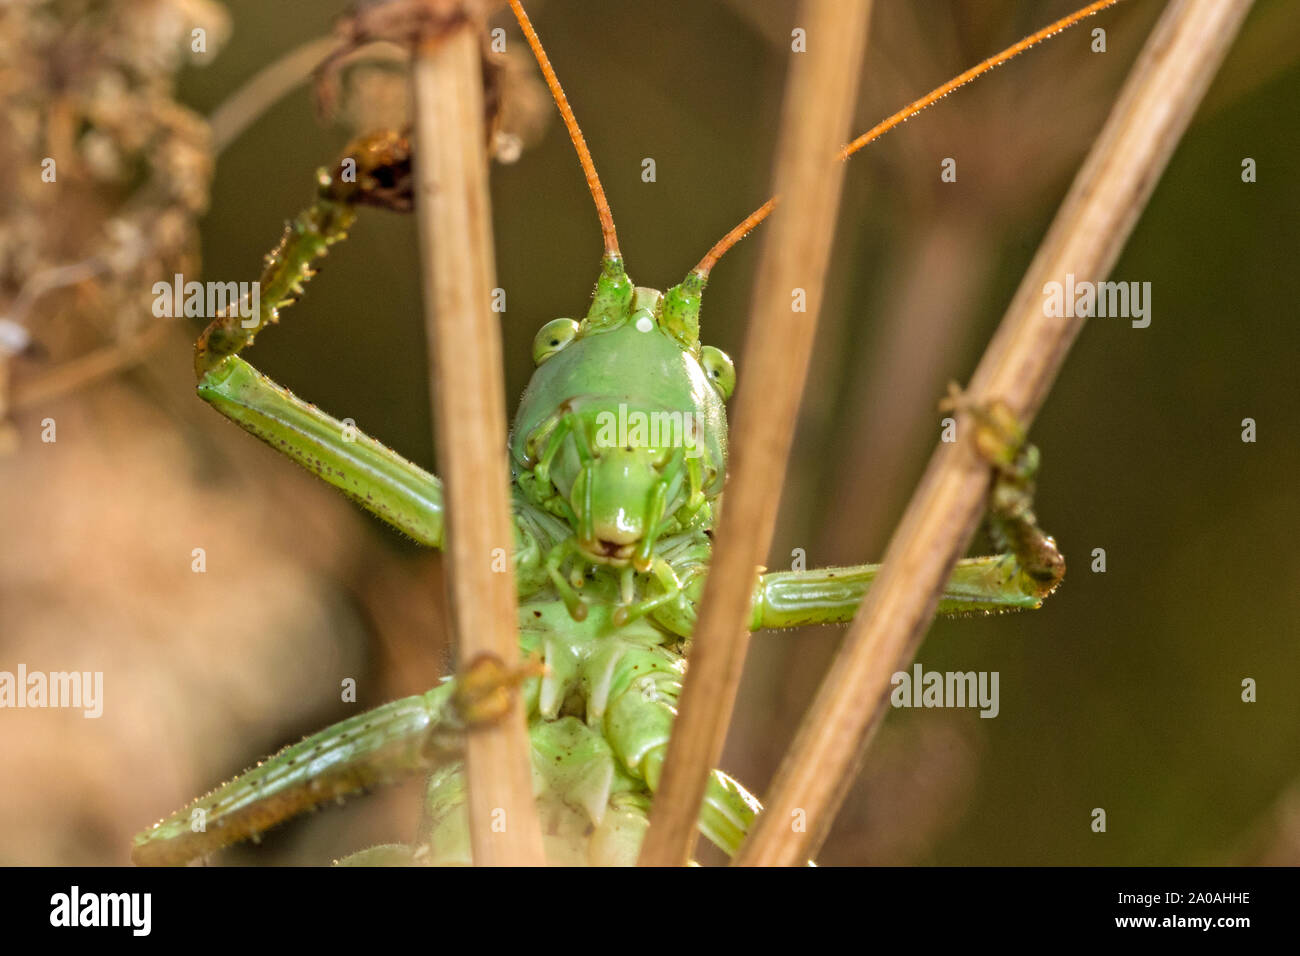 Male Great Green Bush-cricket (Tettigonia viridissima), Cambridgeshire, England Stock Photo